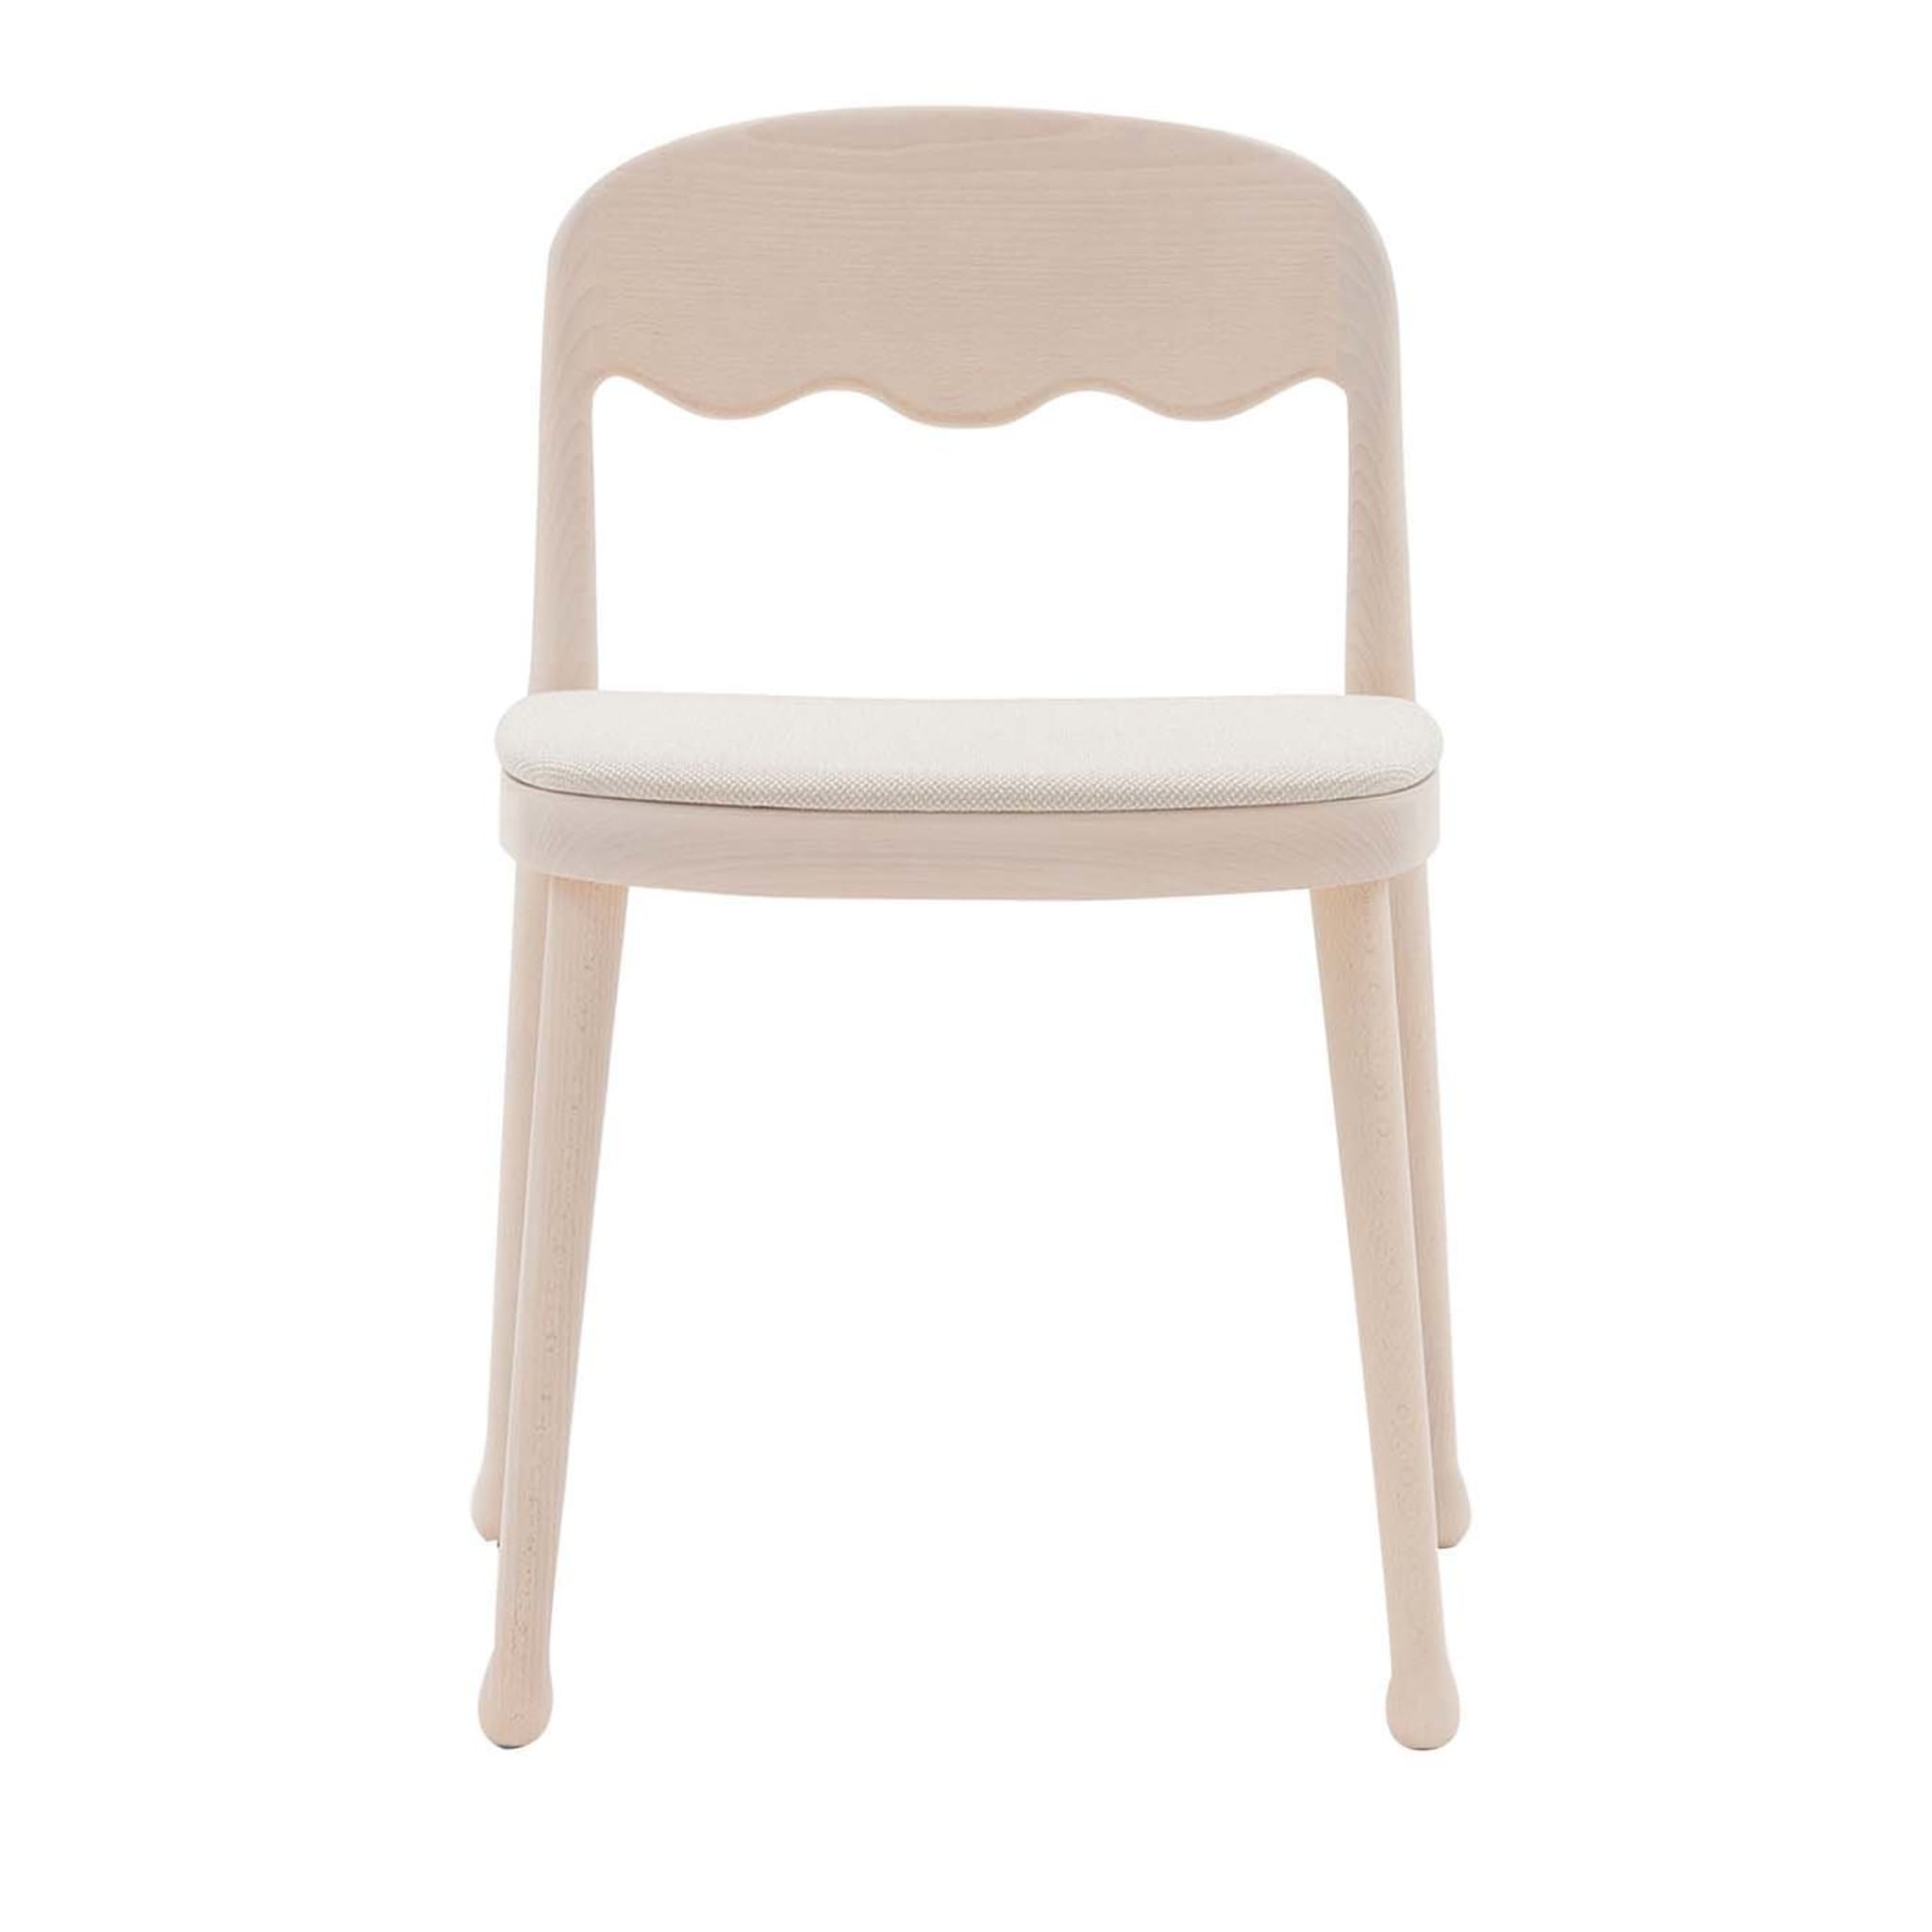 Frisée 251 Cream White Chair by Cristina Celestino - Main view